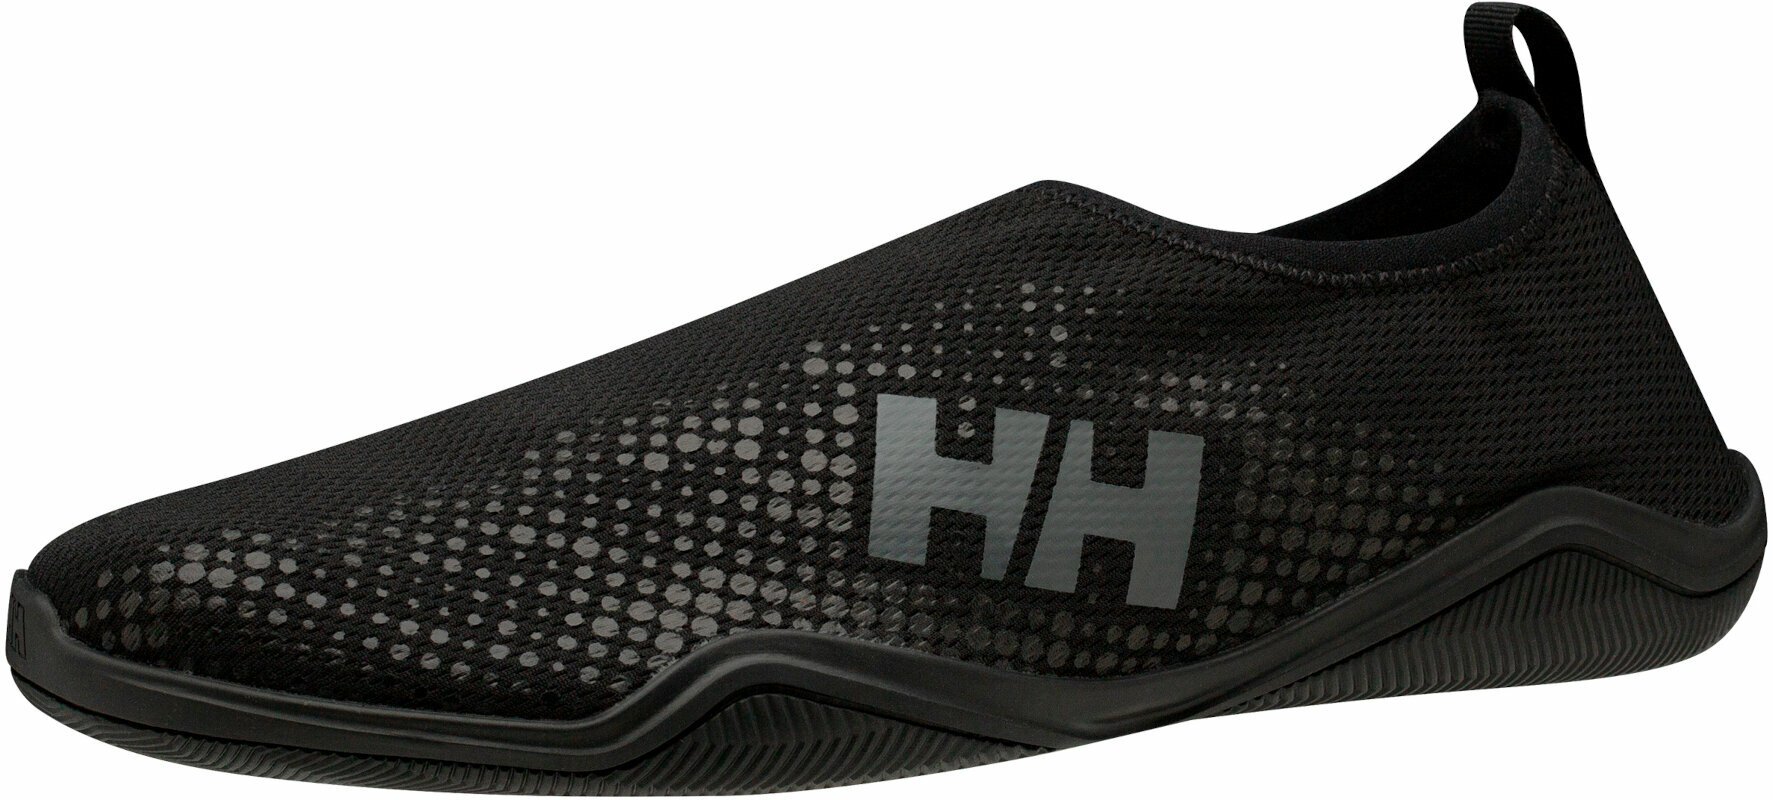 Jachtařská obuv Helly Hansen Men's Crest Watermoc Black/Charcoal 44